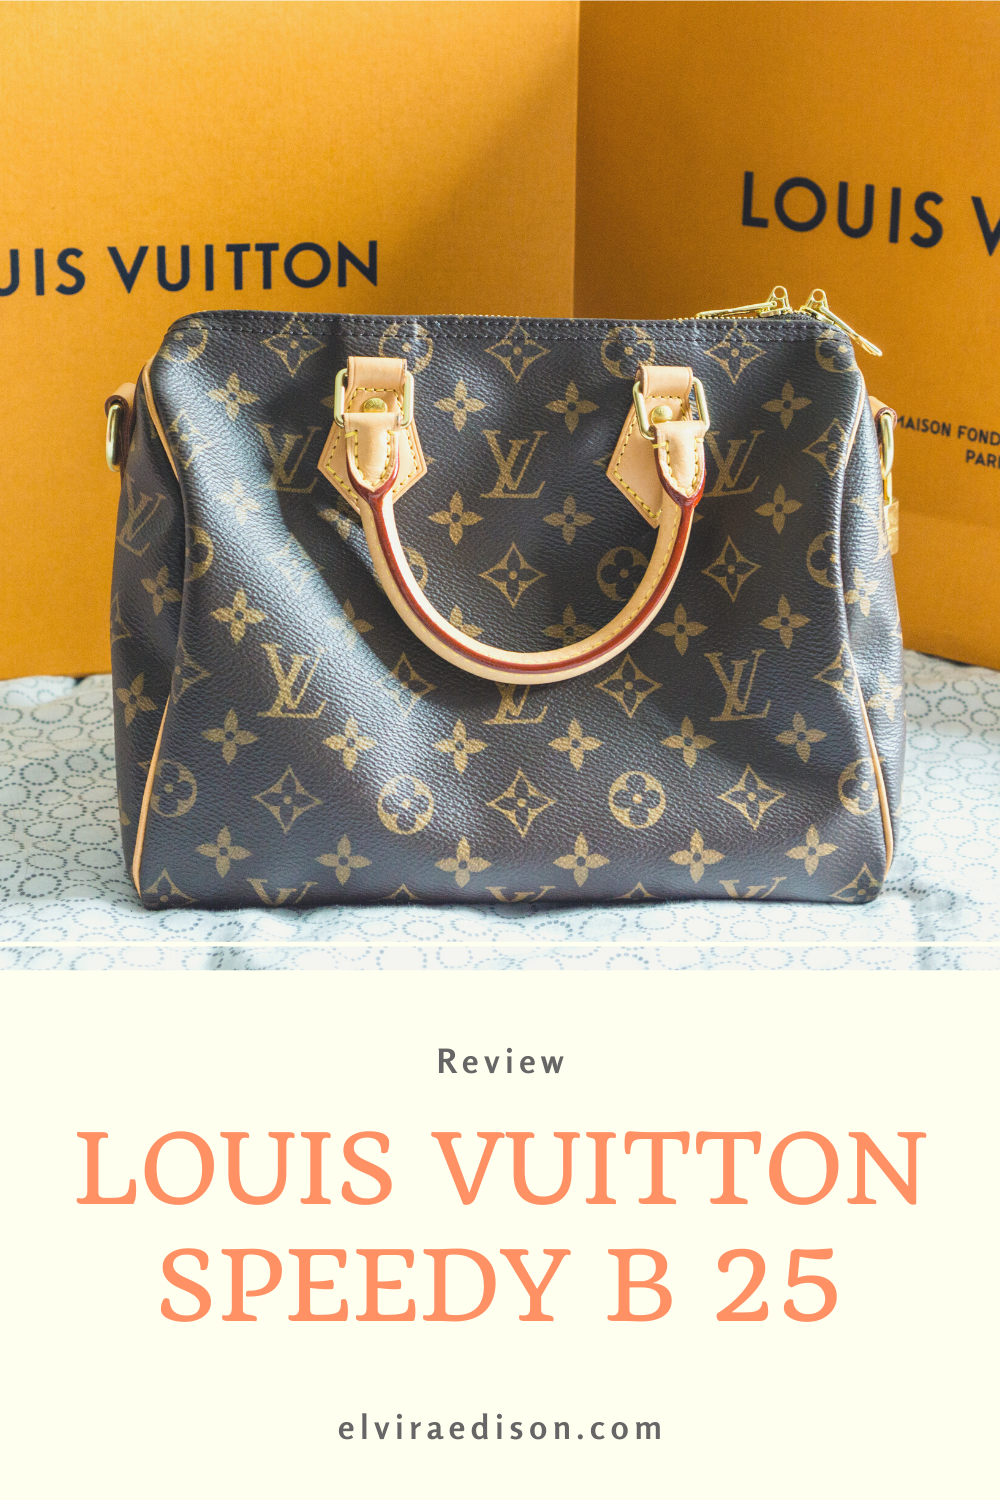 Louis Vuitton Speedy Bandoulière Review: Is It Worth it? - A Byers